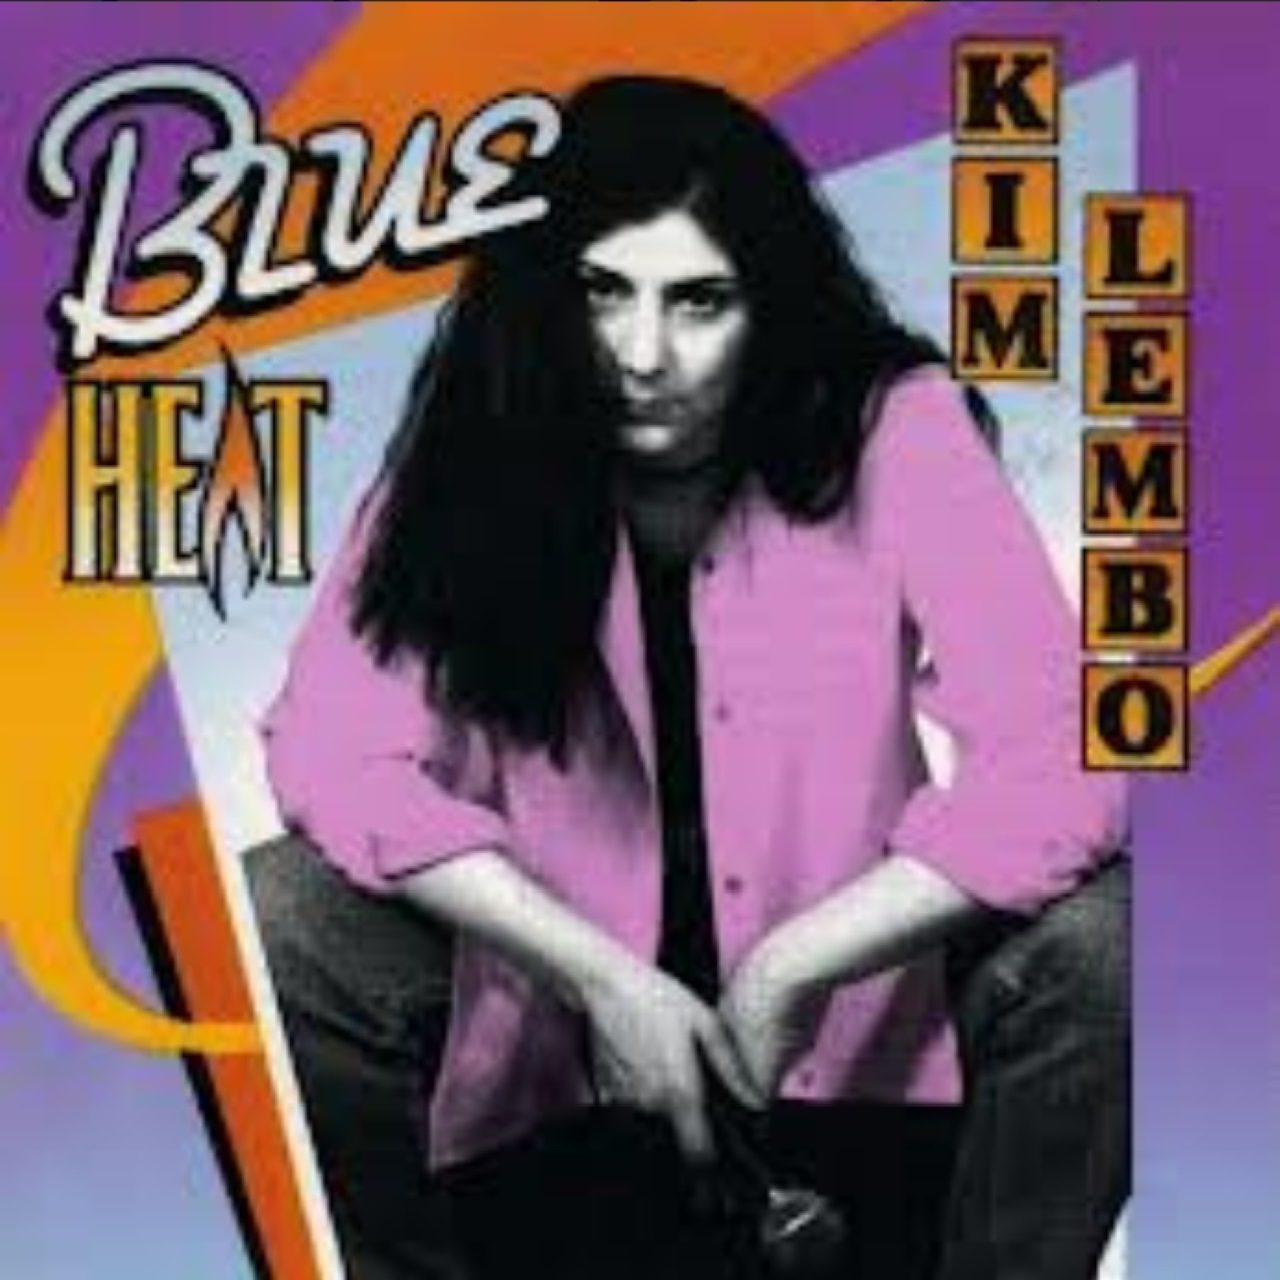 Kim Lembo – Blue Heat cover album